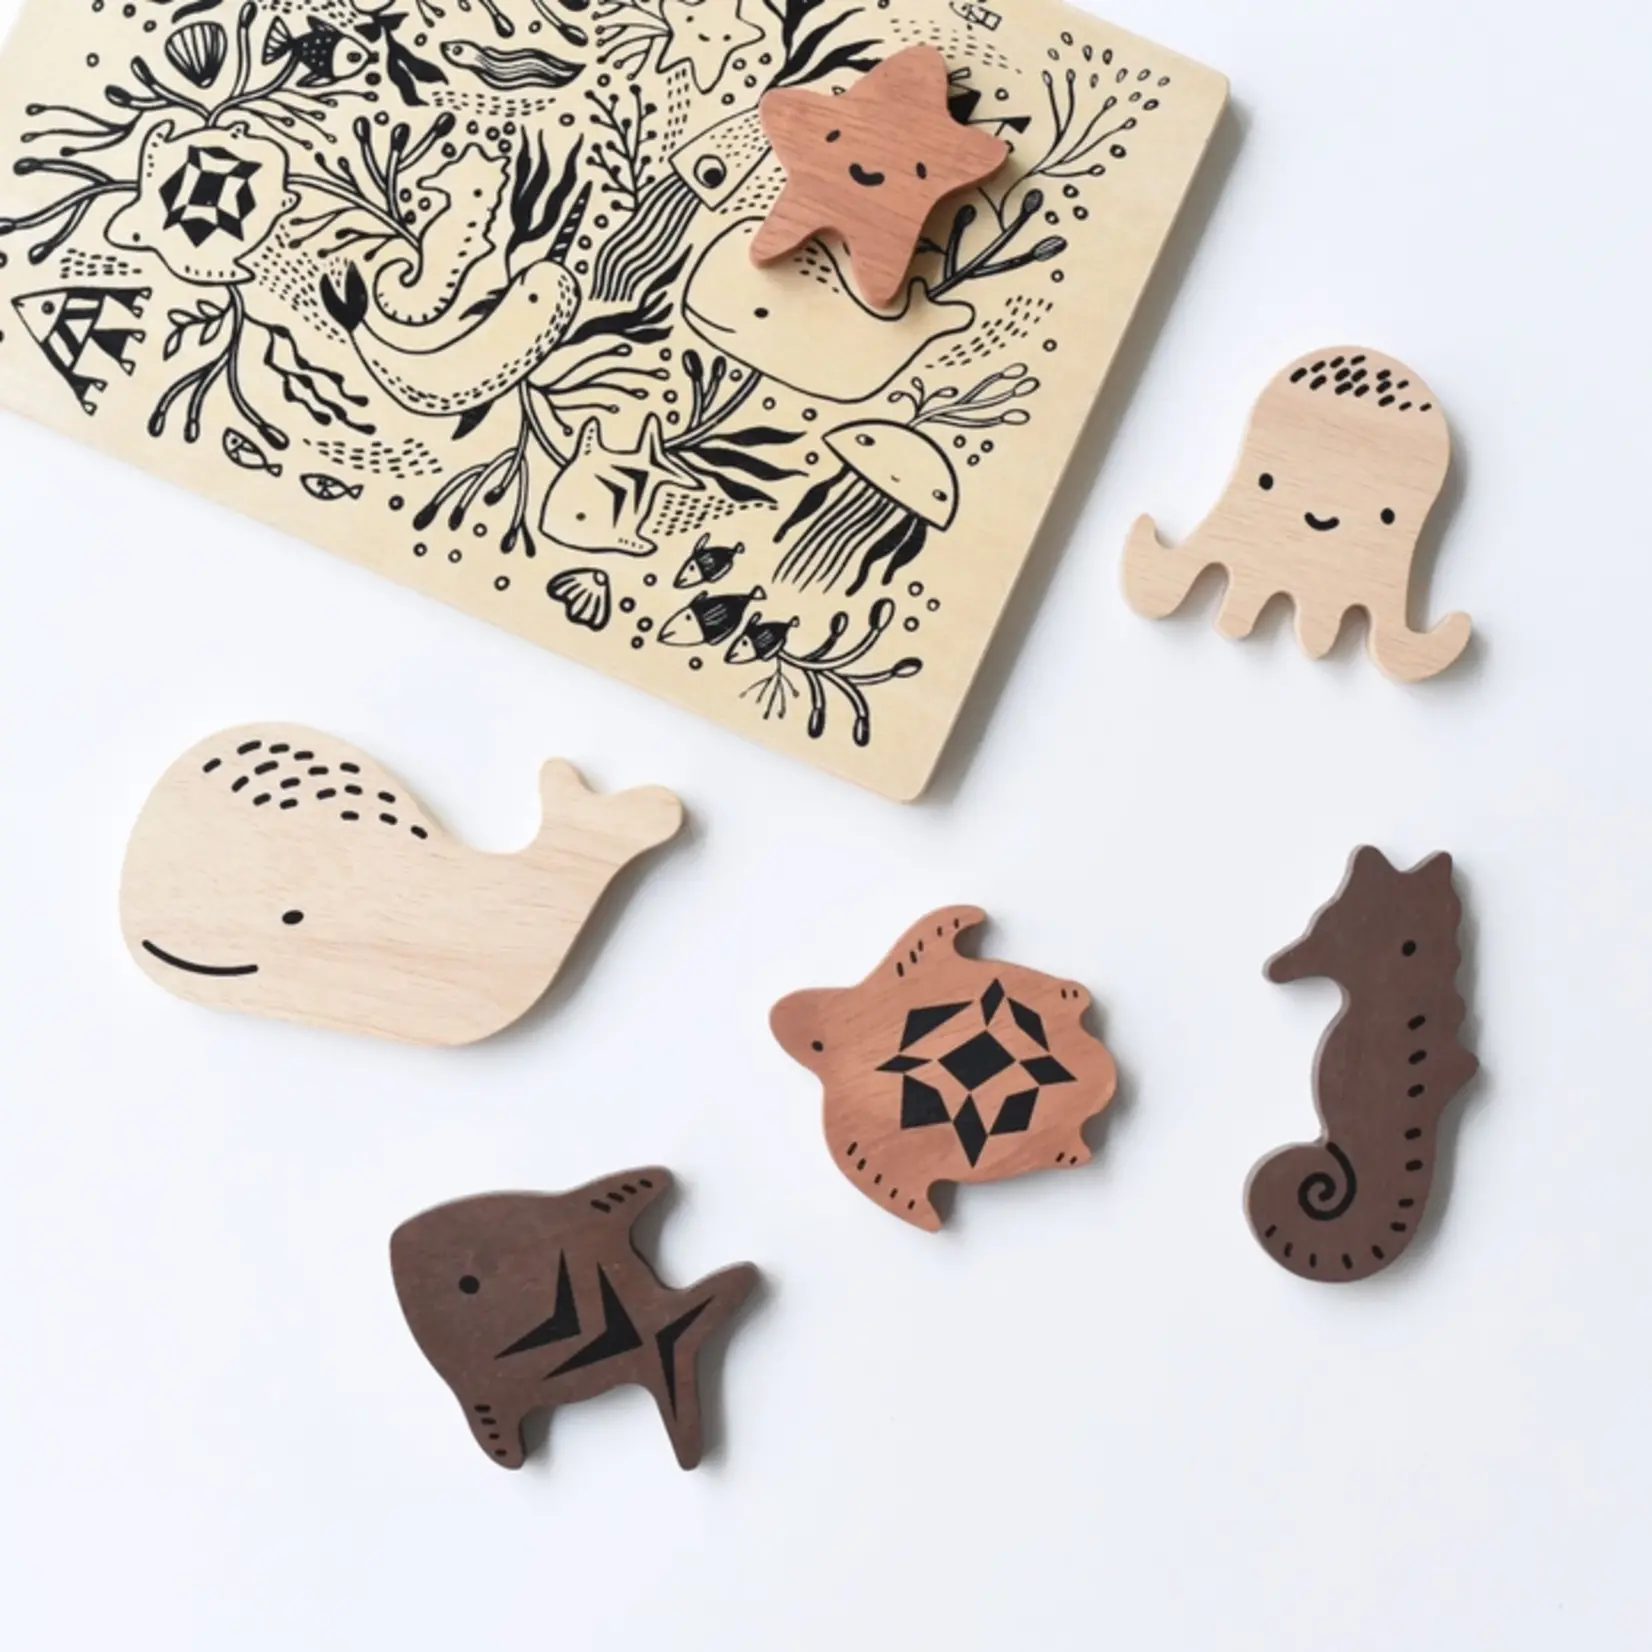 Wee Gallery Wooden Tray Puzzle- Ocean Animals